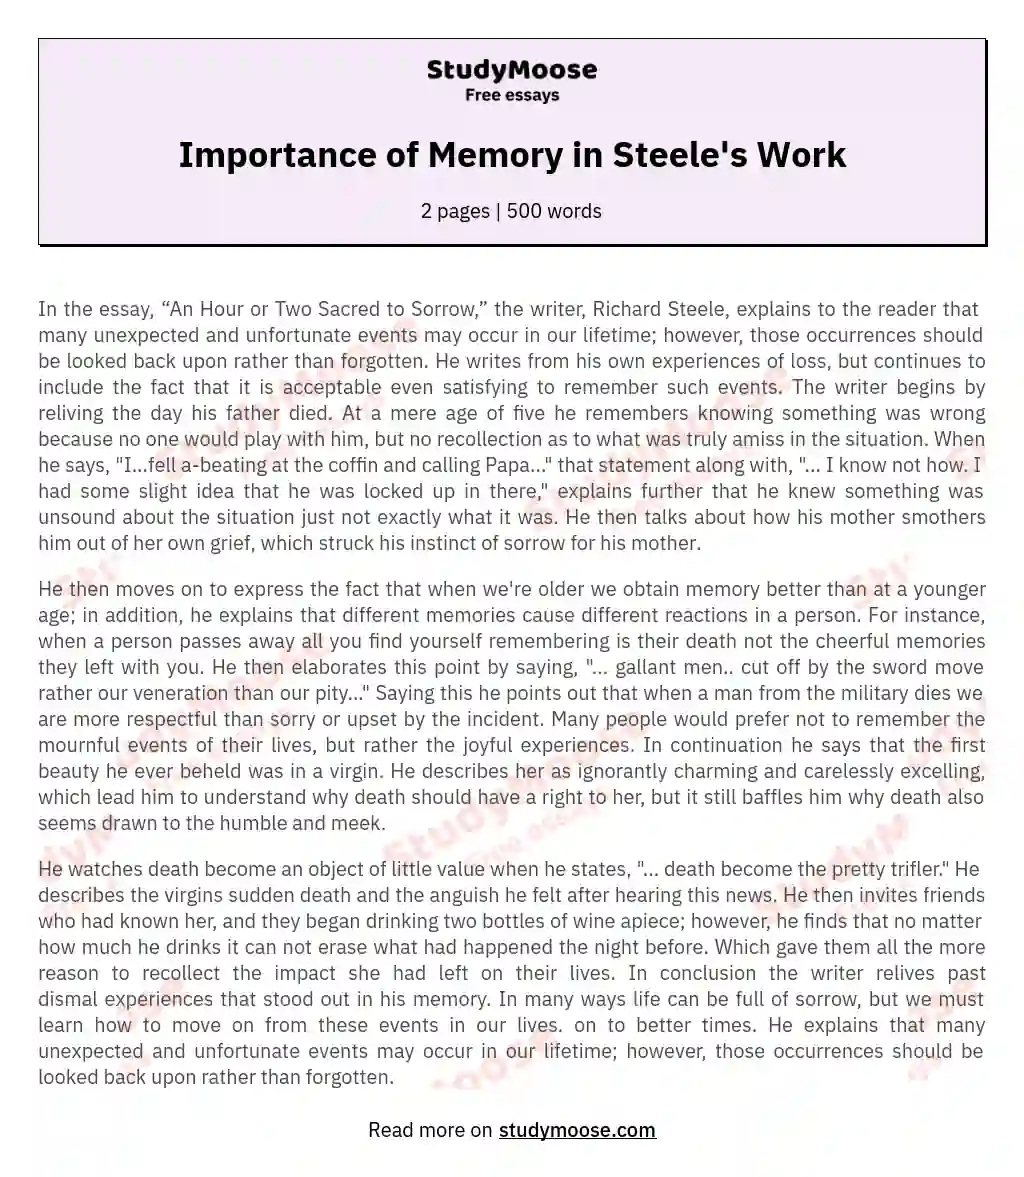 Importance of Memory in Steele's Work